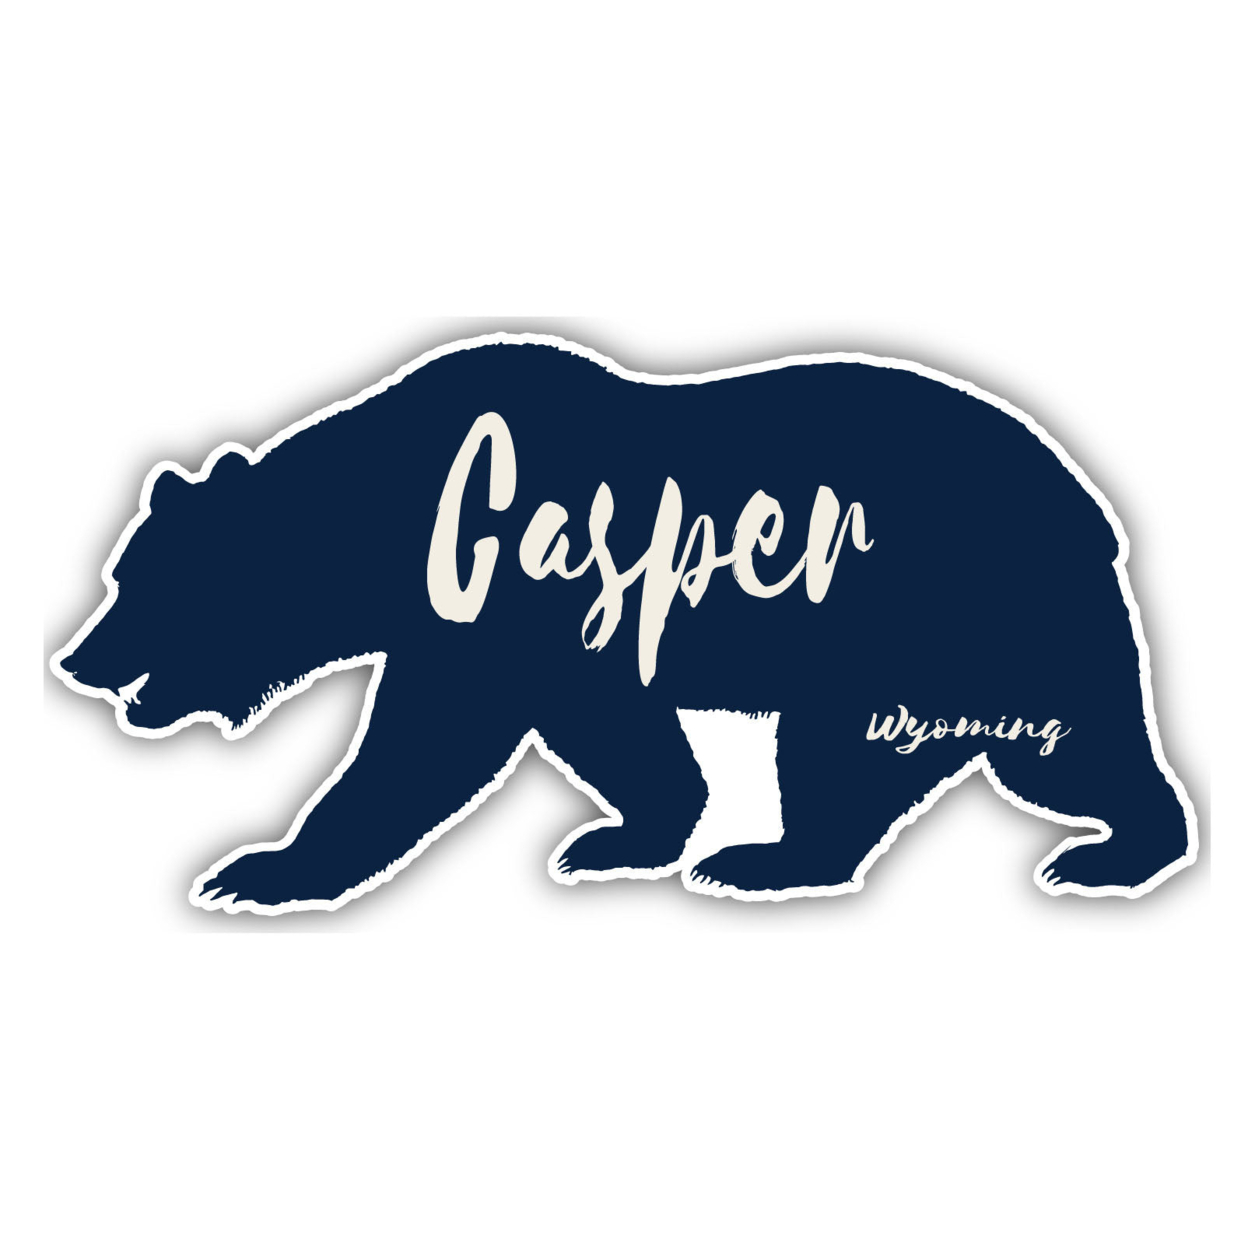 Casper Wyoming Souvenir Decorative Stickers (Choose Theme And Size) - Single Unit, 6-Inch, Camp Life